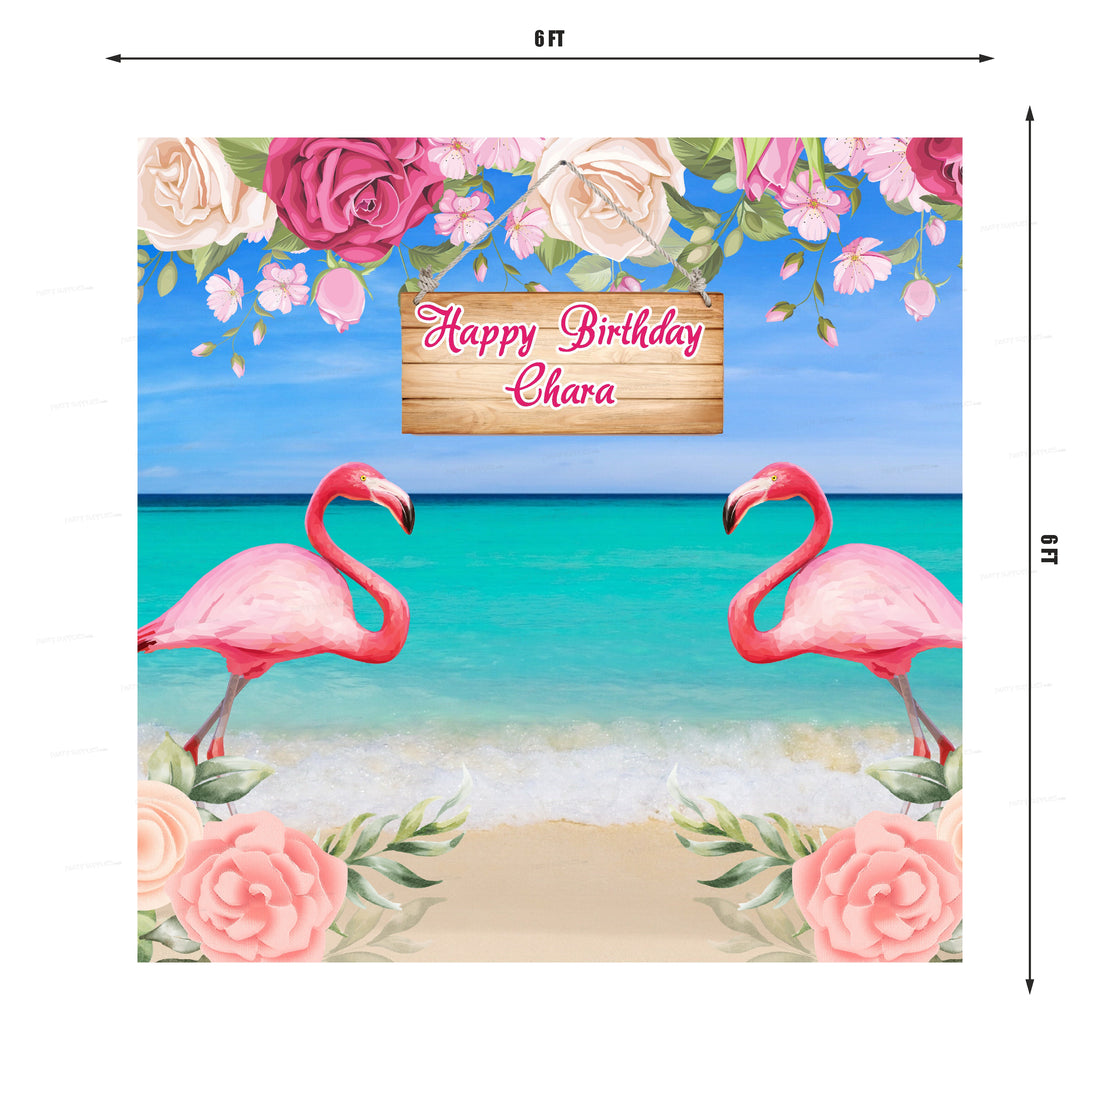 PSI Flamingo Theme customized Square Backdrop